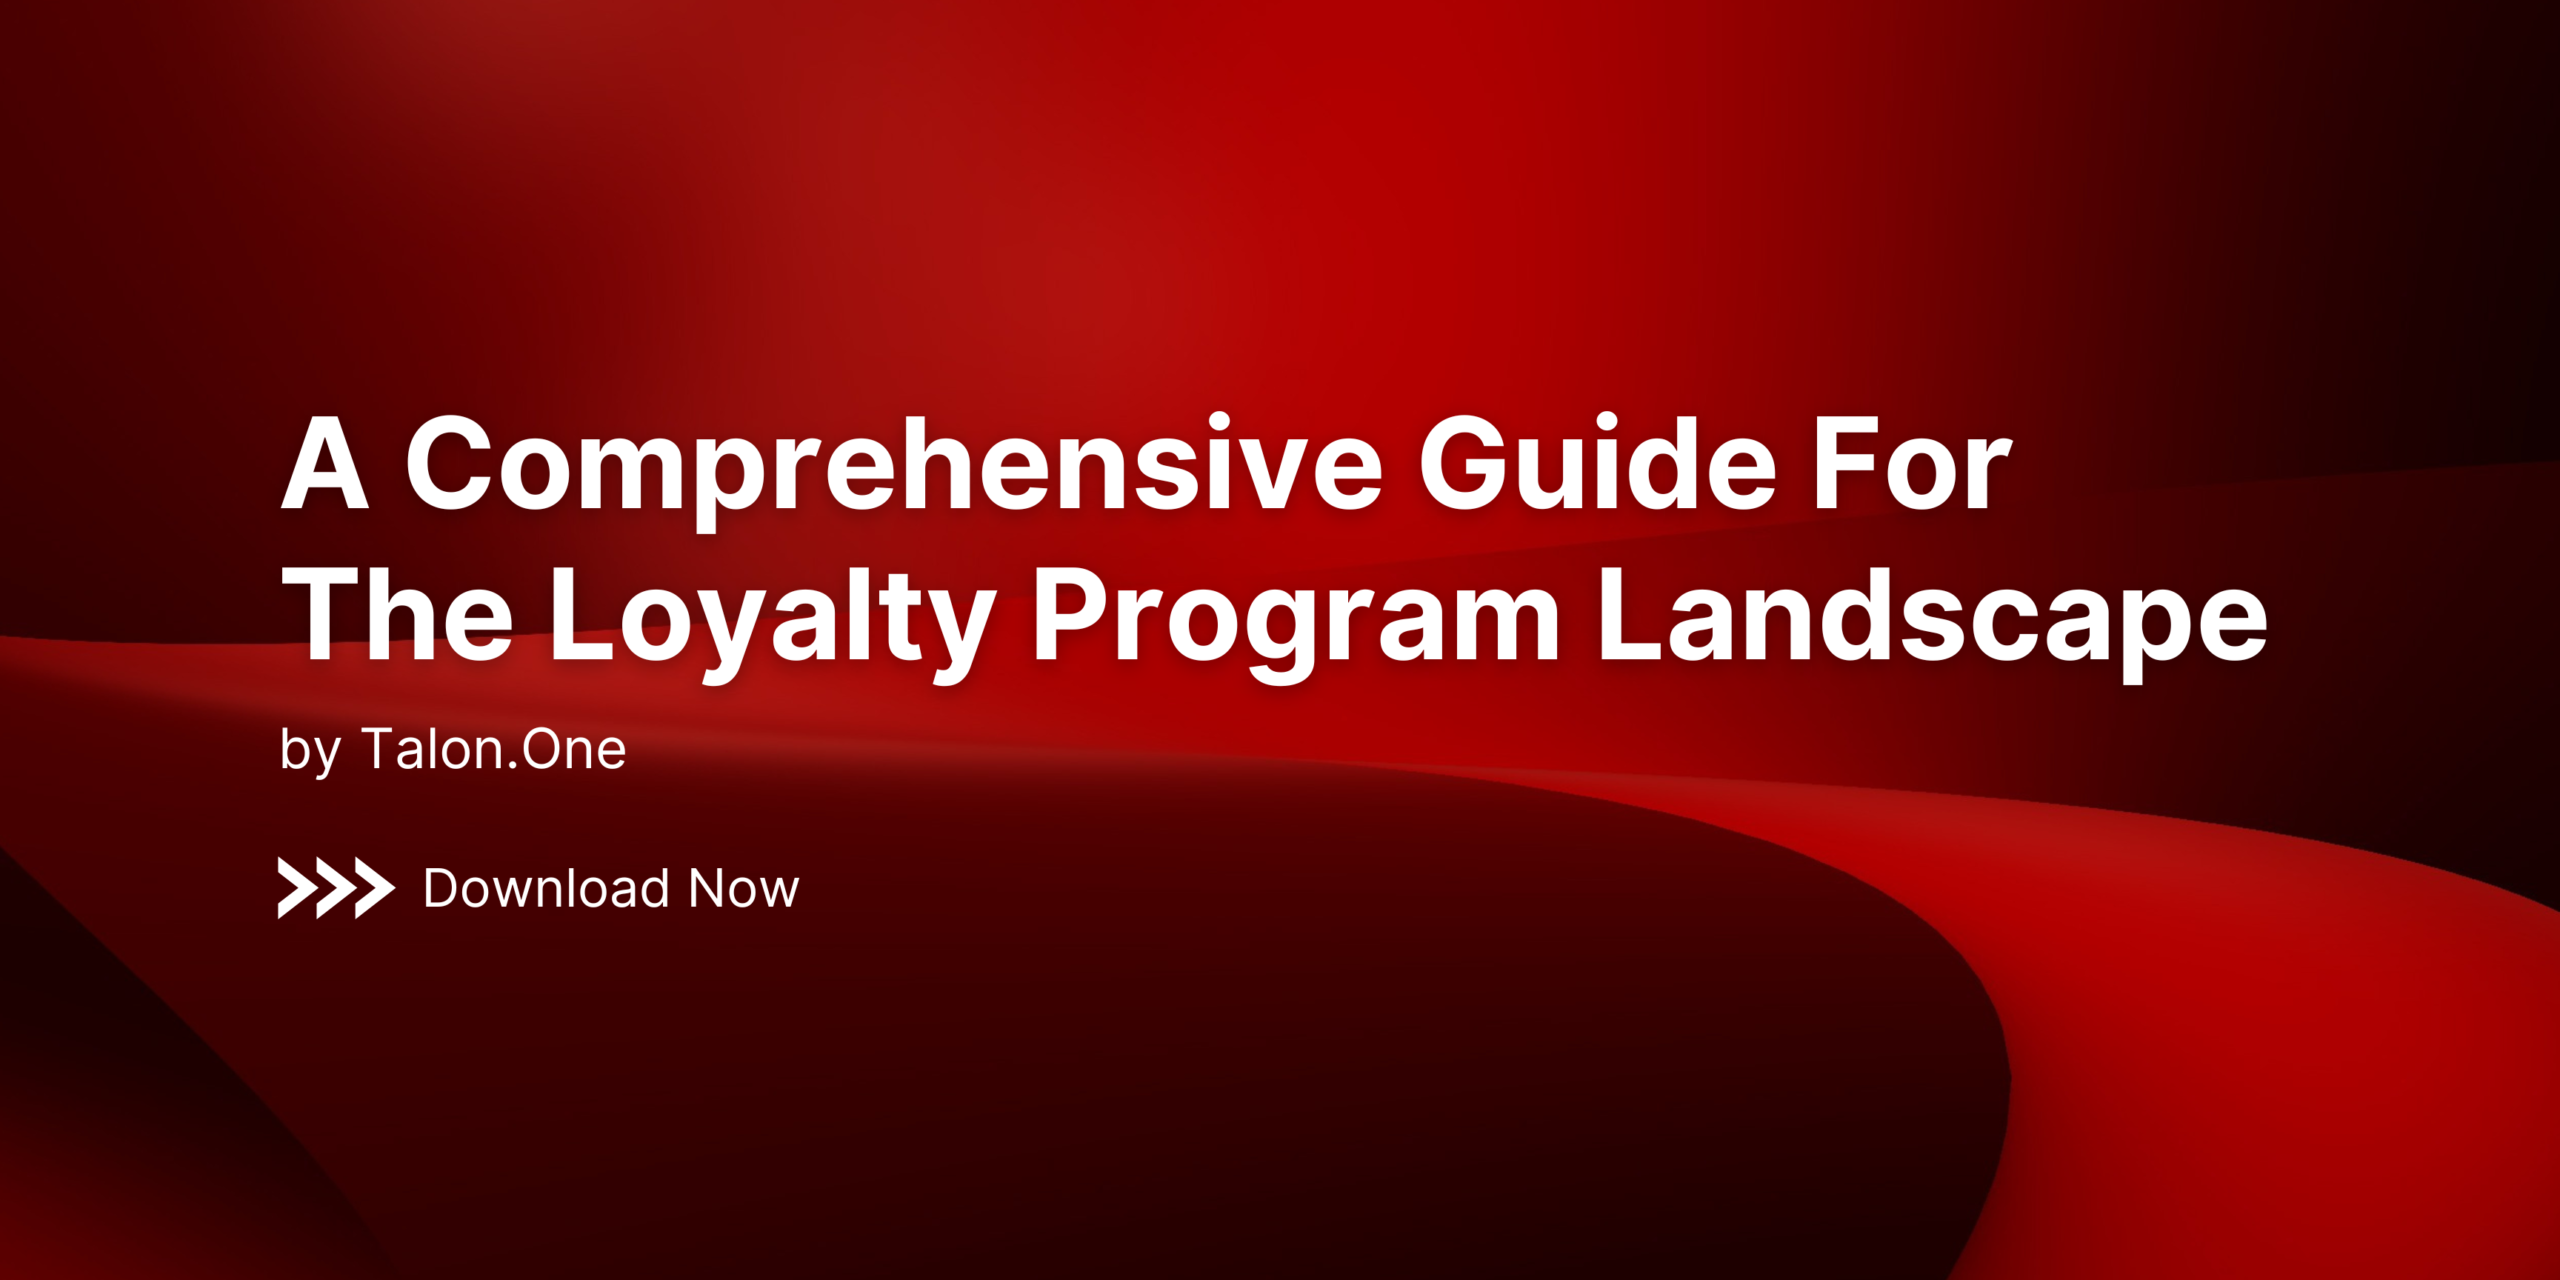 A Comprehensive Guide For The Loyalty Program Landscape